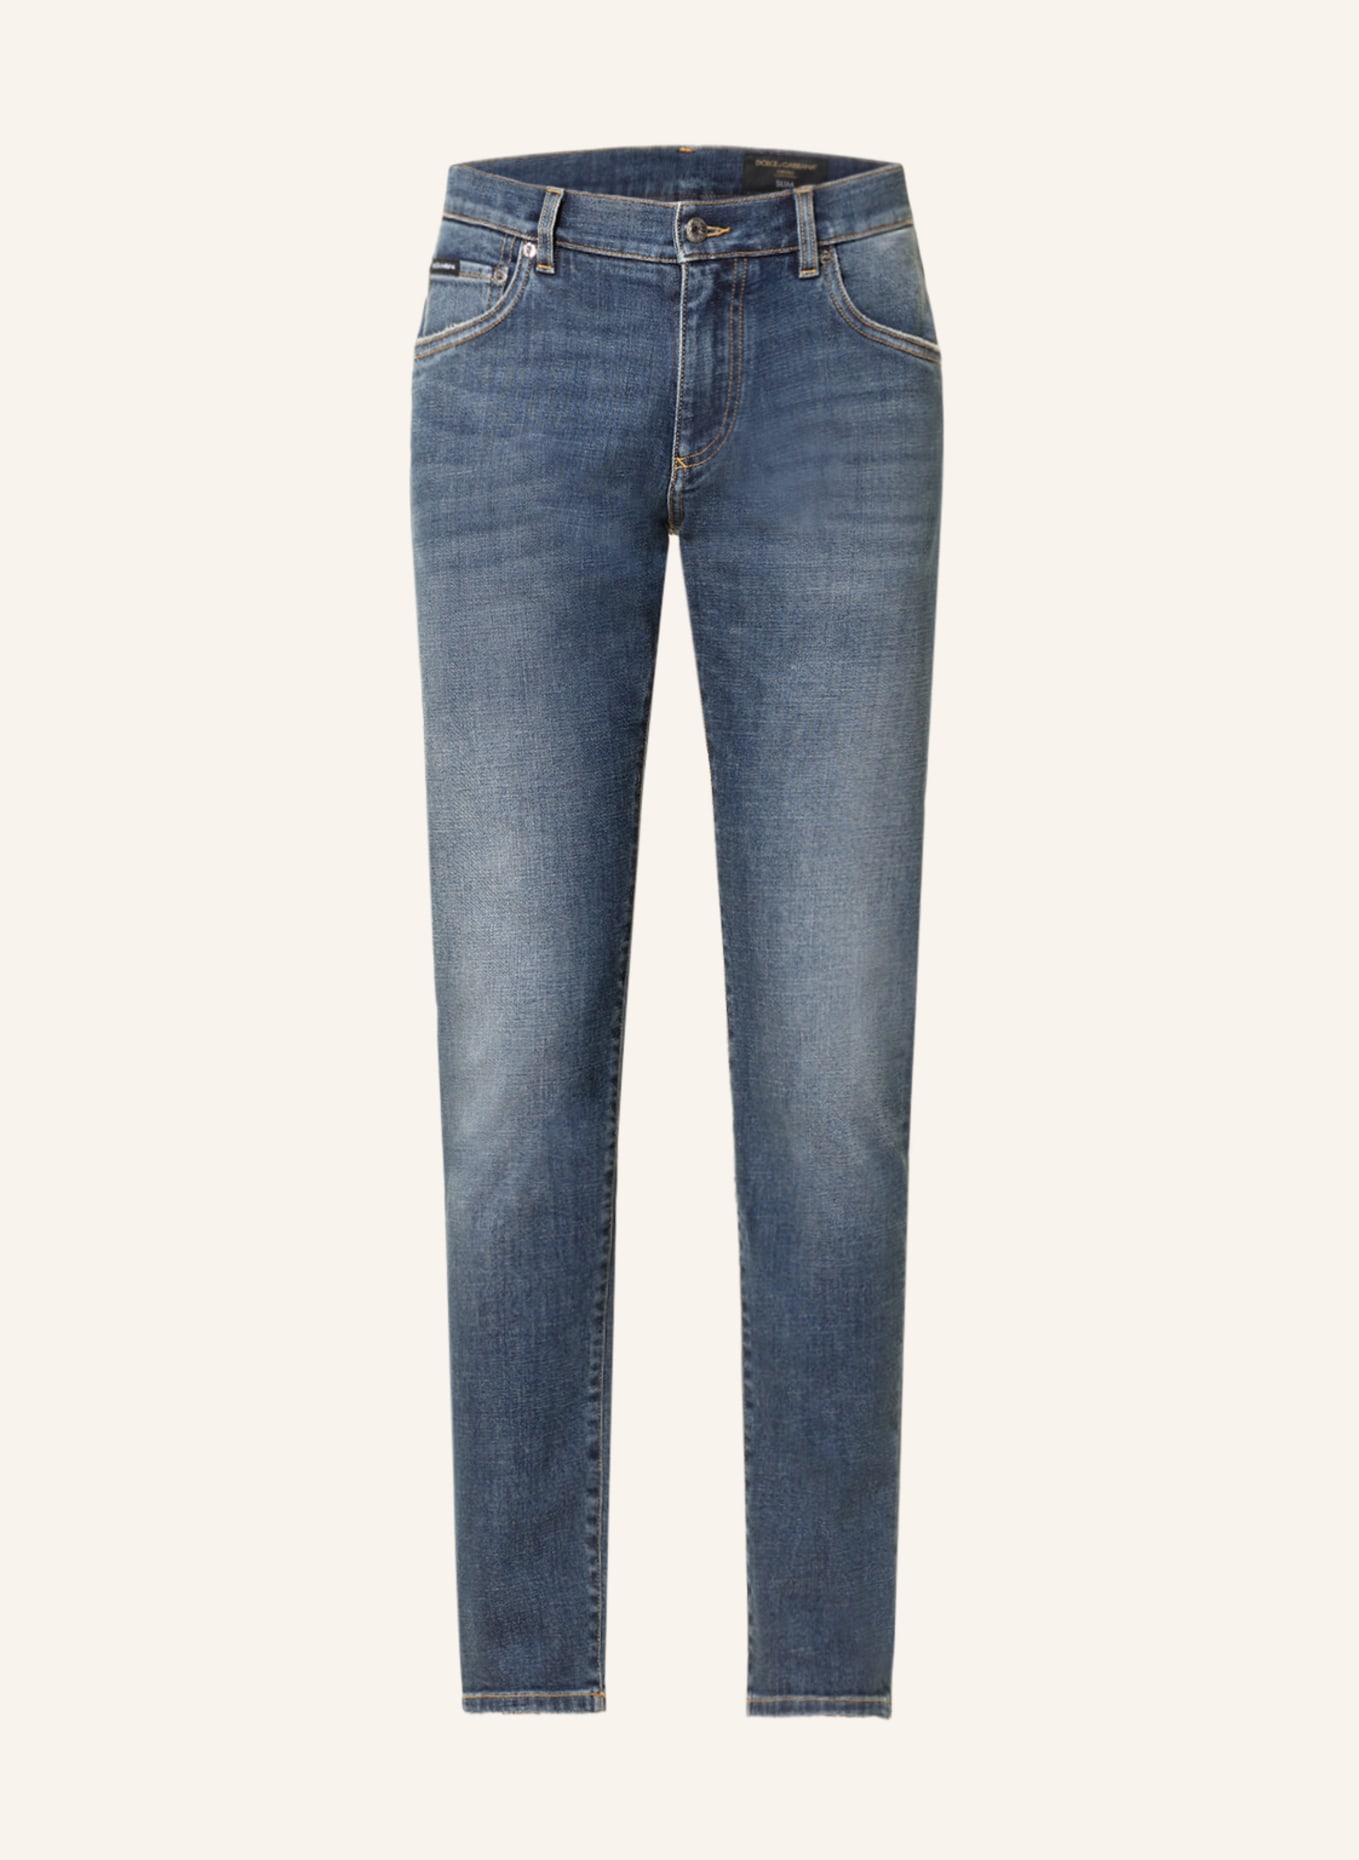 DOLCE & GABBANA Jeans Slim Fit, Farbe: S9001 VARIANTE ABBINATA (Bild 1)